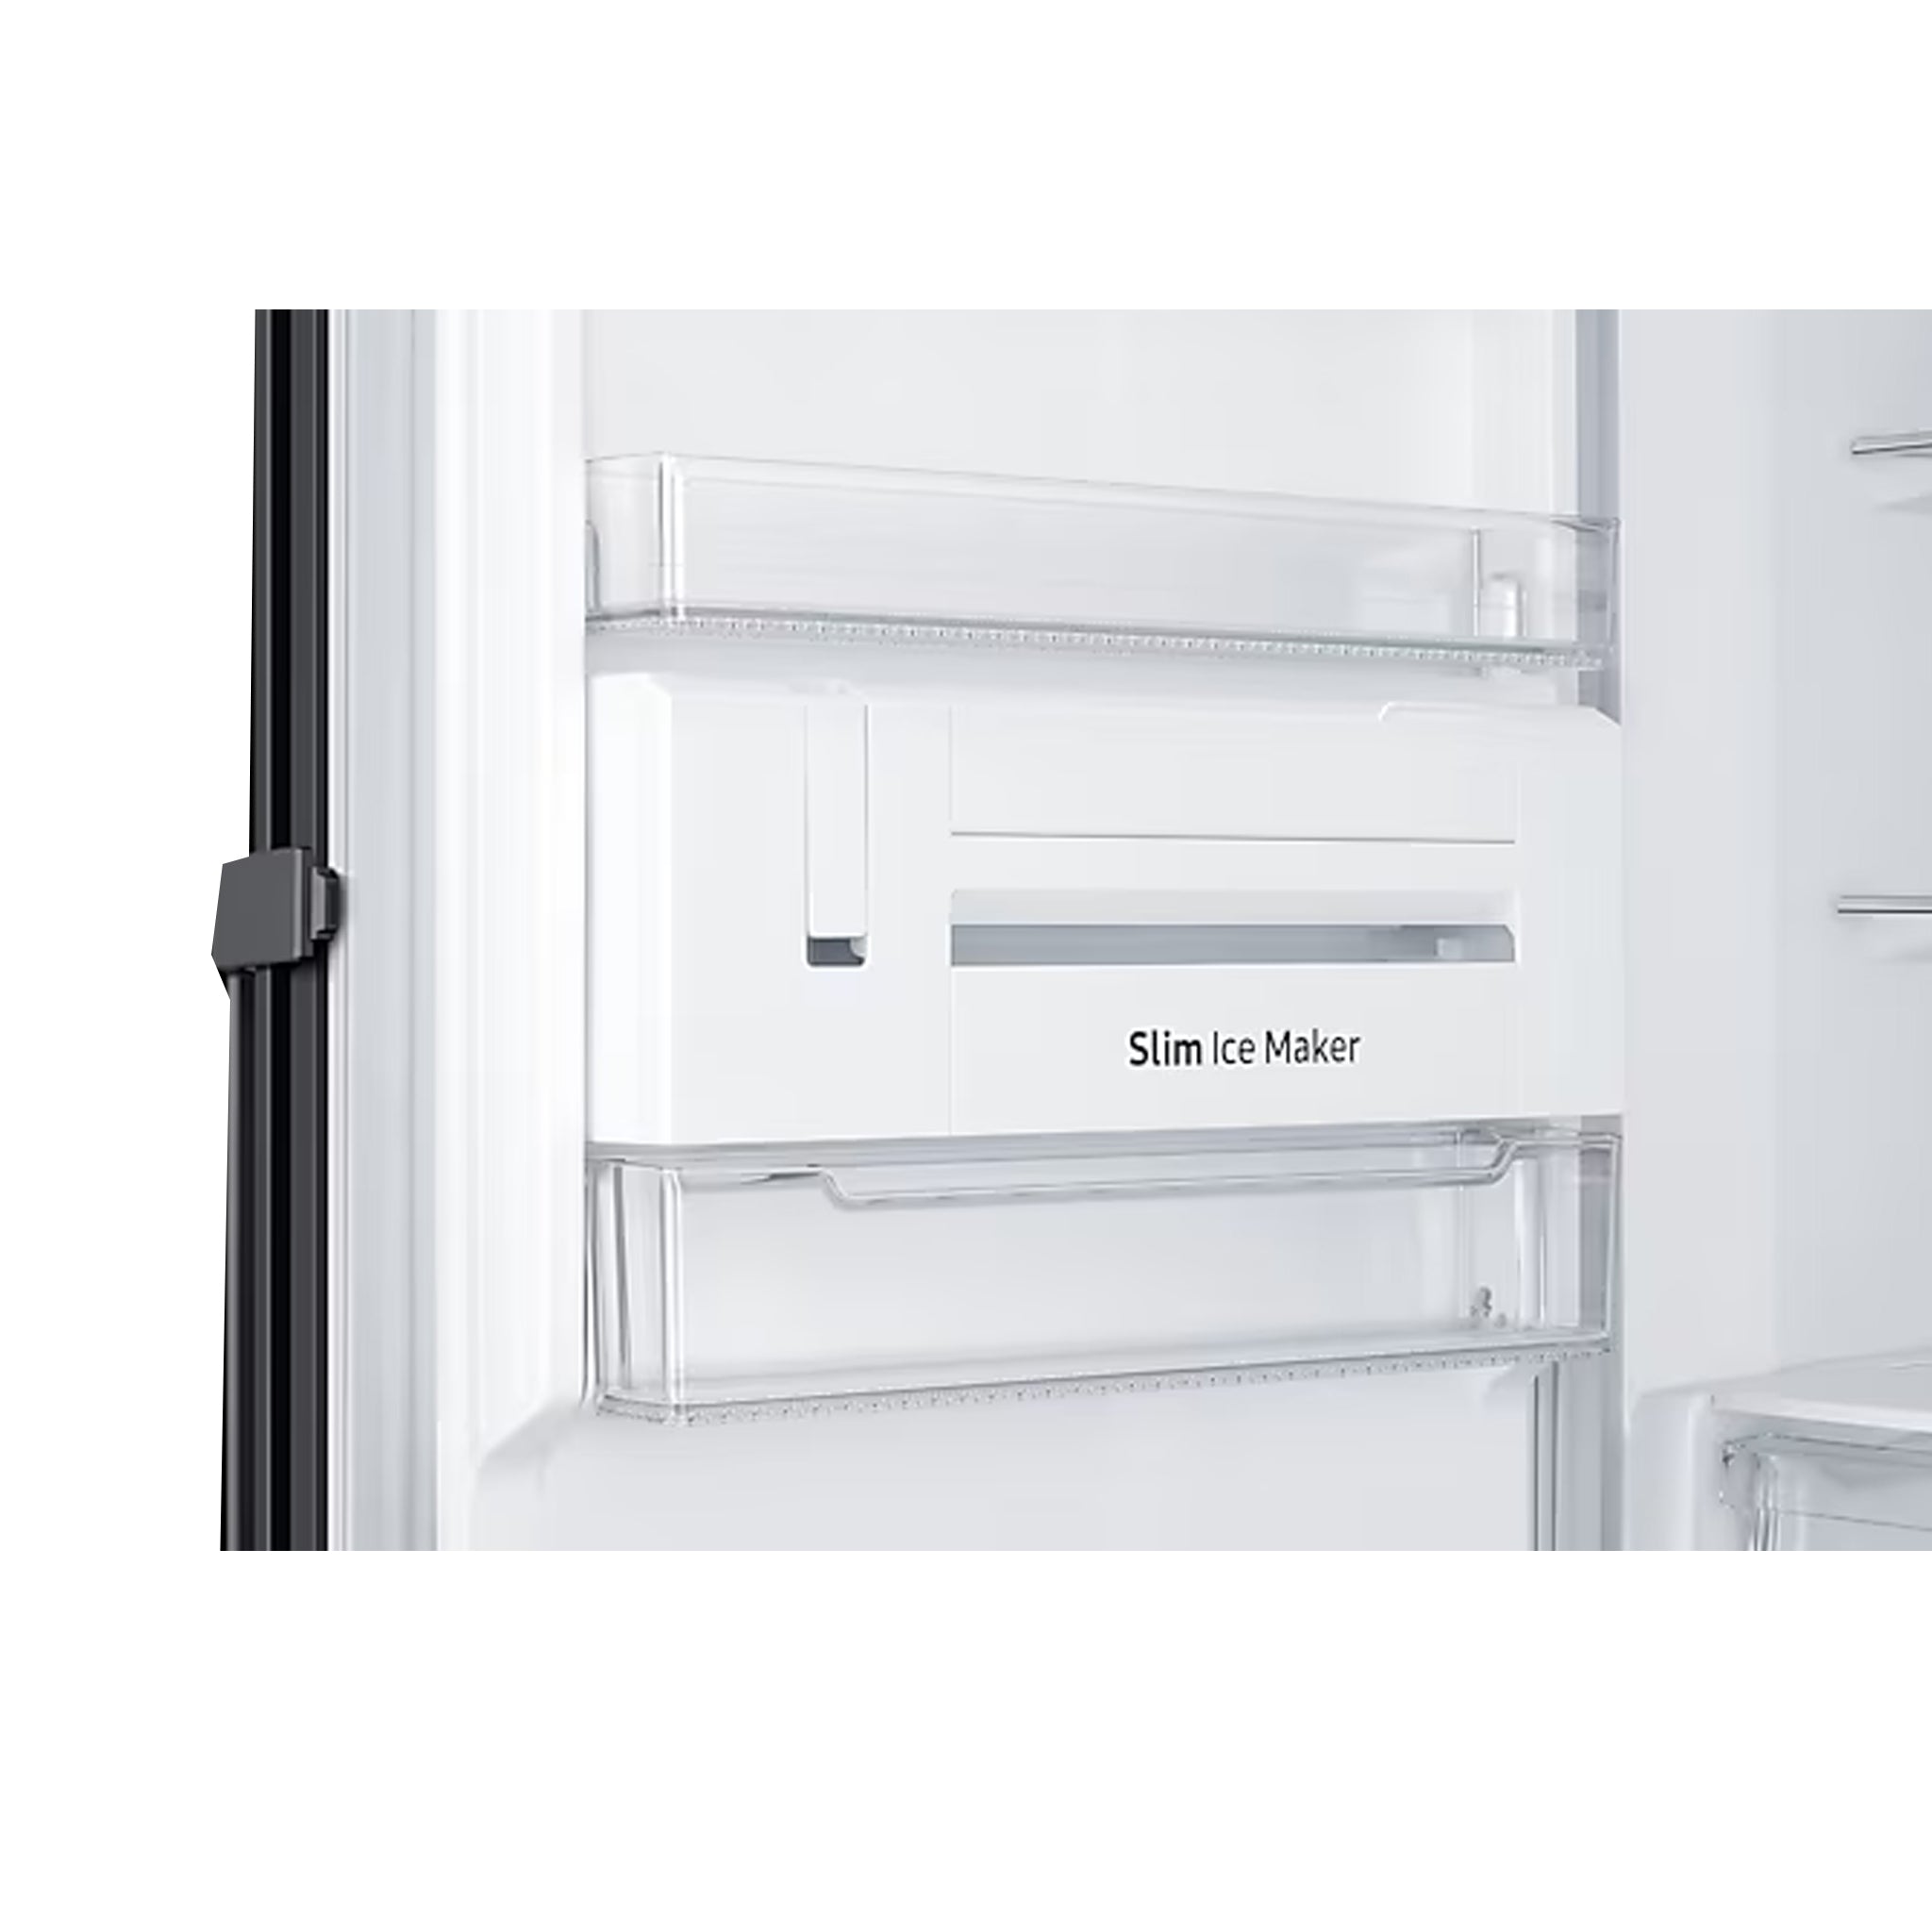 SAMSUNG 11.4 cu.ft RZ32T744501 BESPOKE Refrigerator Samsung